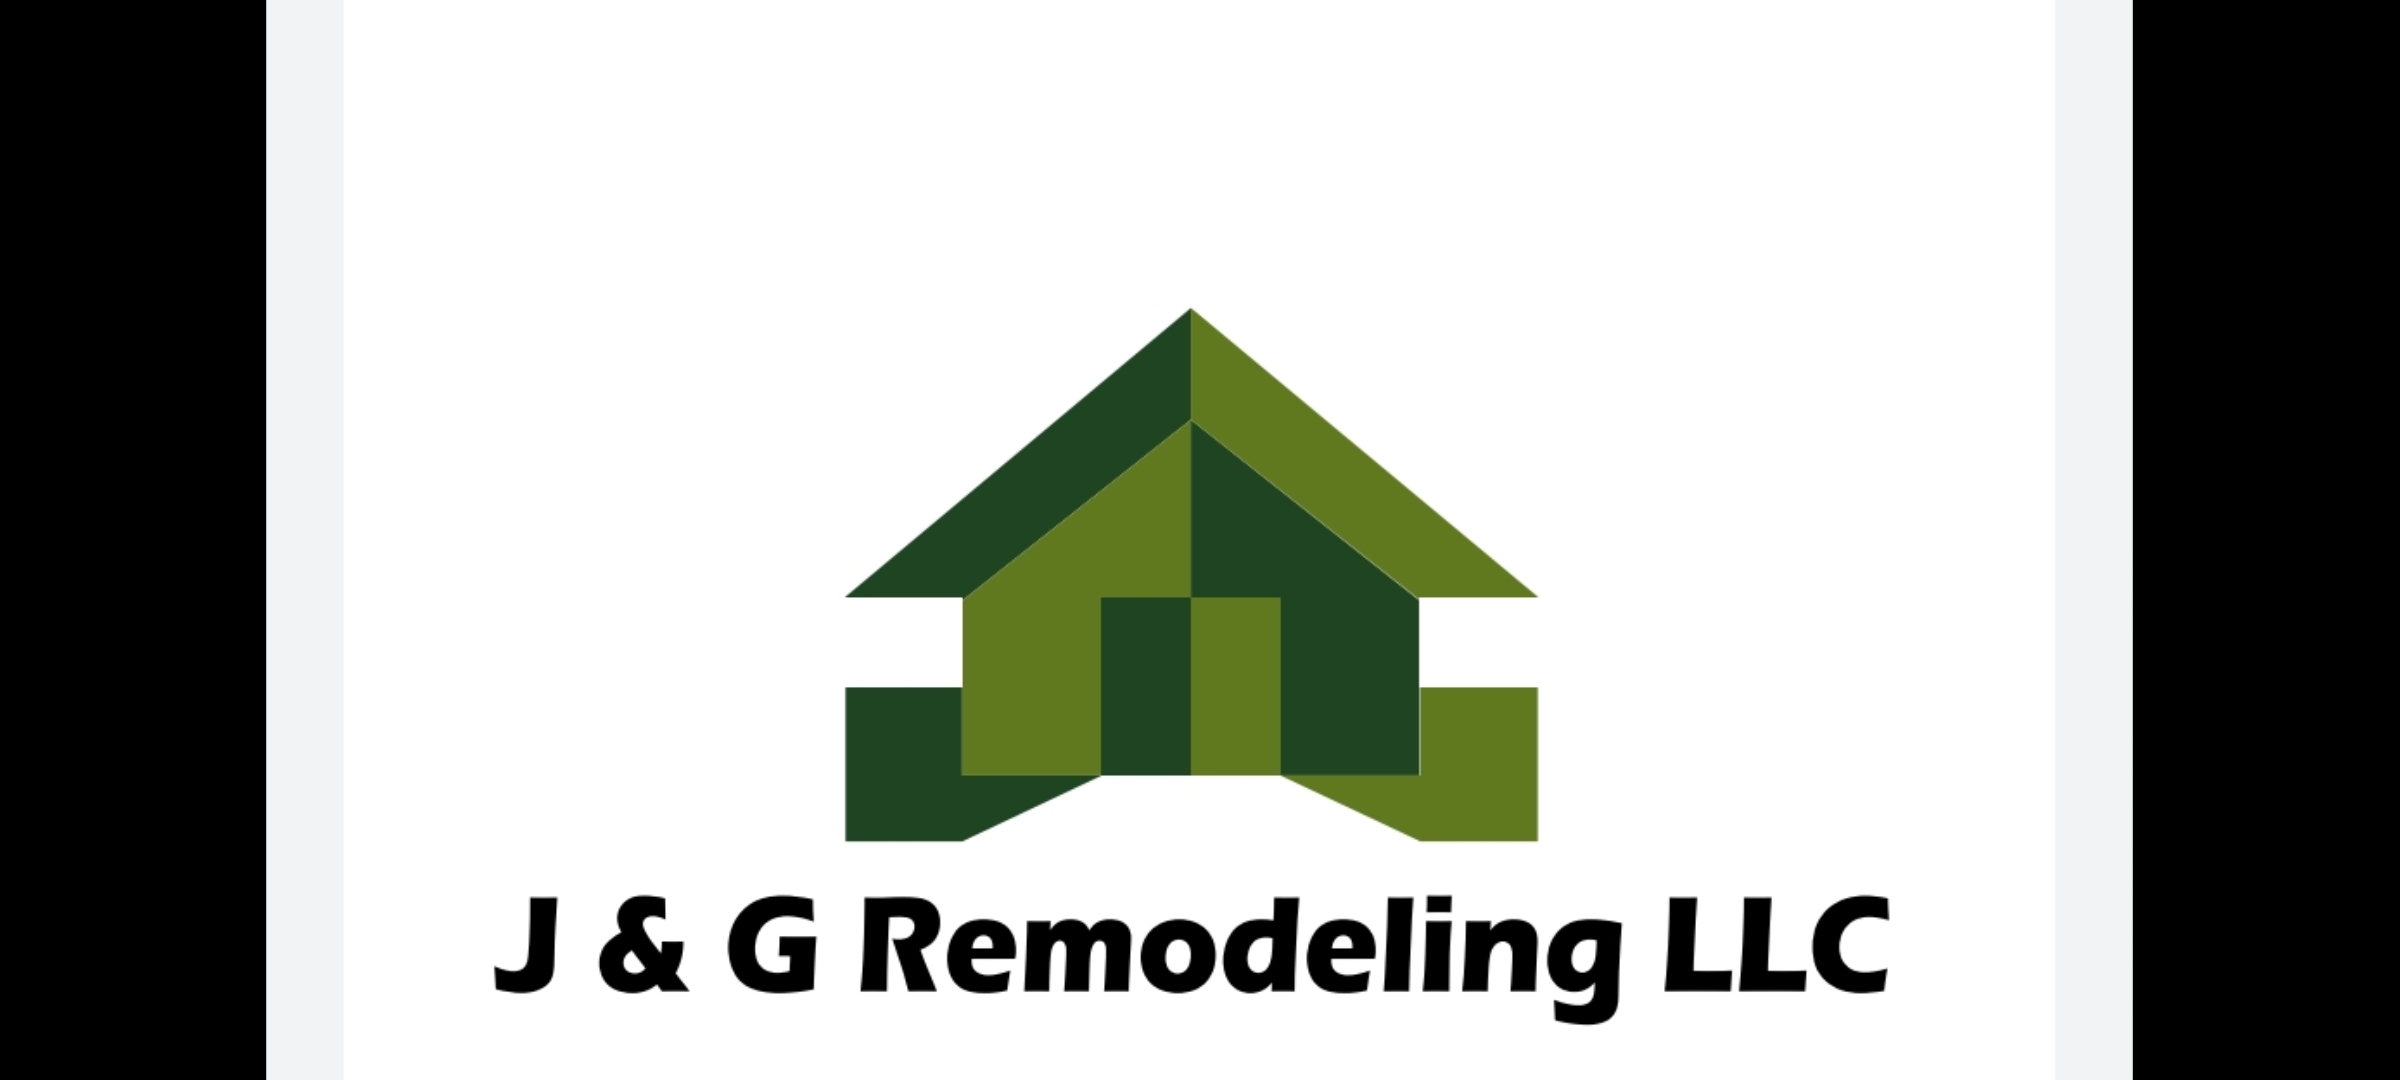 J&G Remodeling Logo